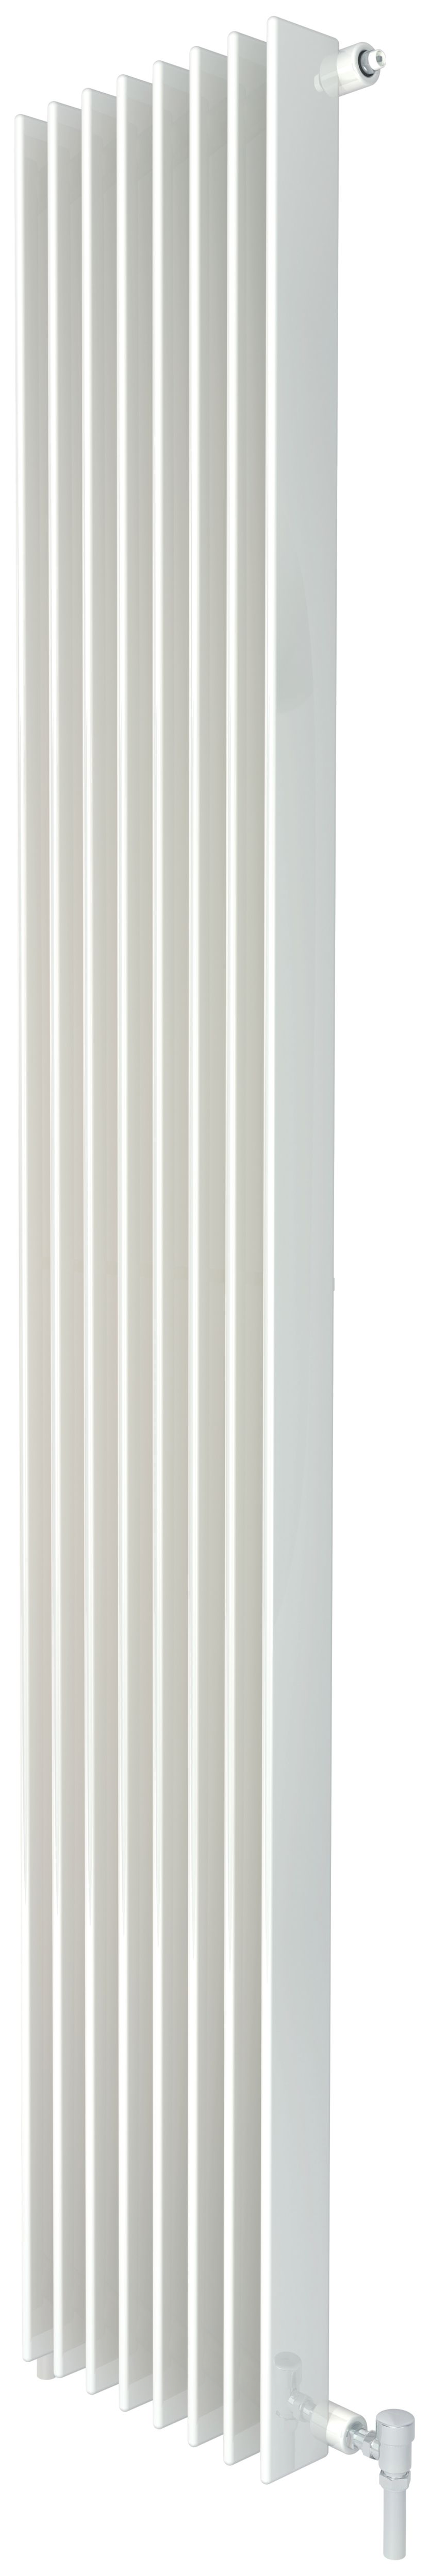 Henrad Verona Slim Single Panel Vertical Designer Radiator - White 2000 x 520 mm